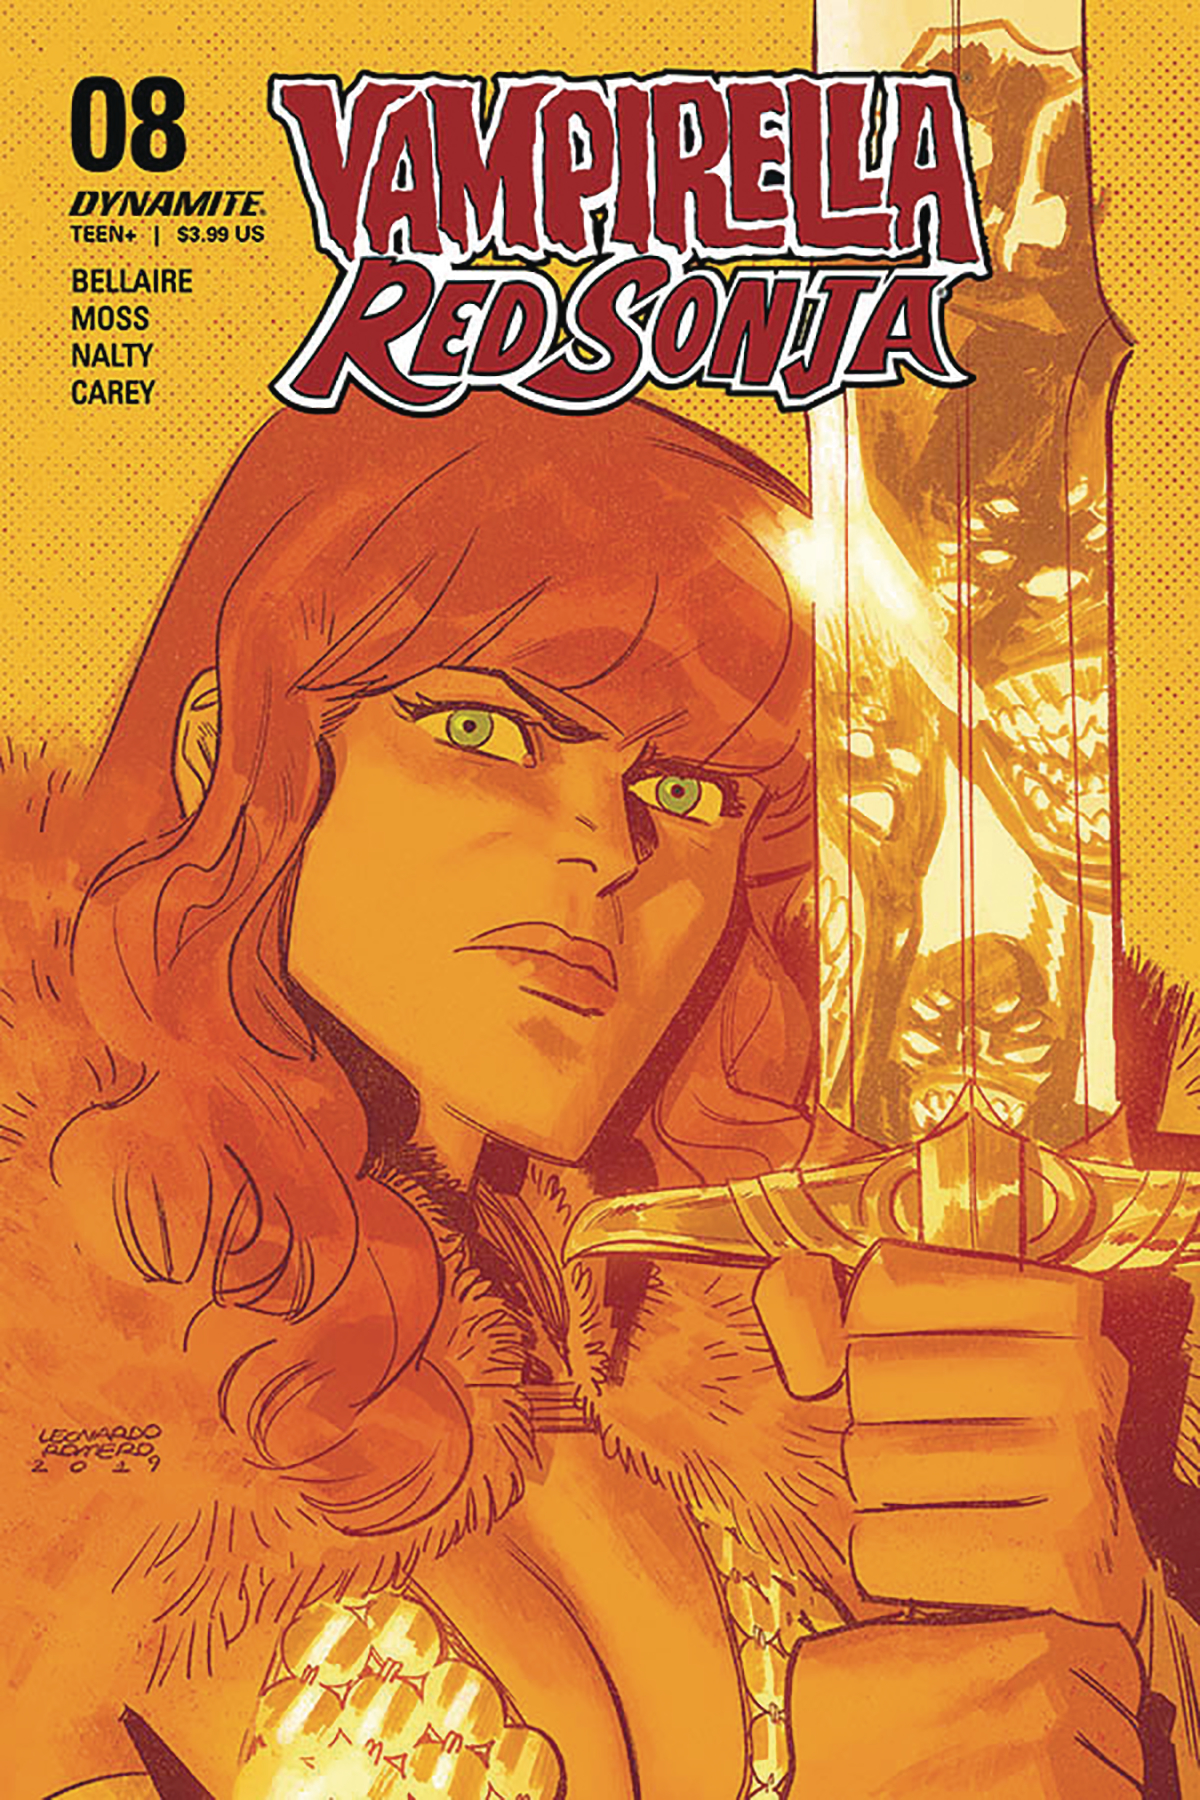 Vampirella Red Sonja #10 Cover C Romero